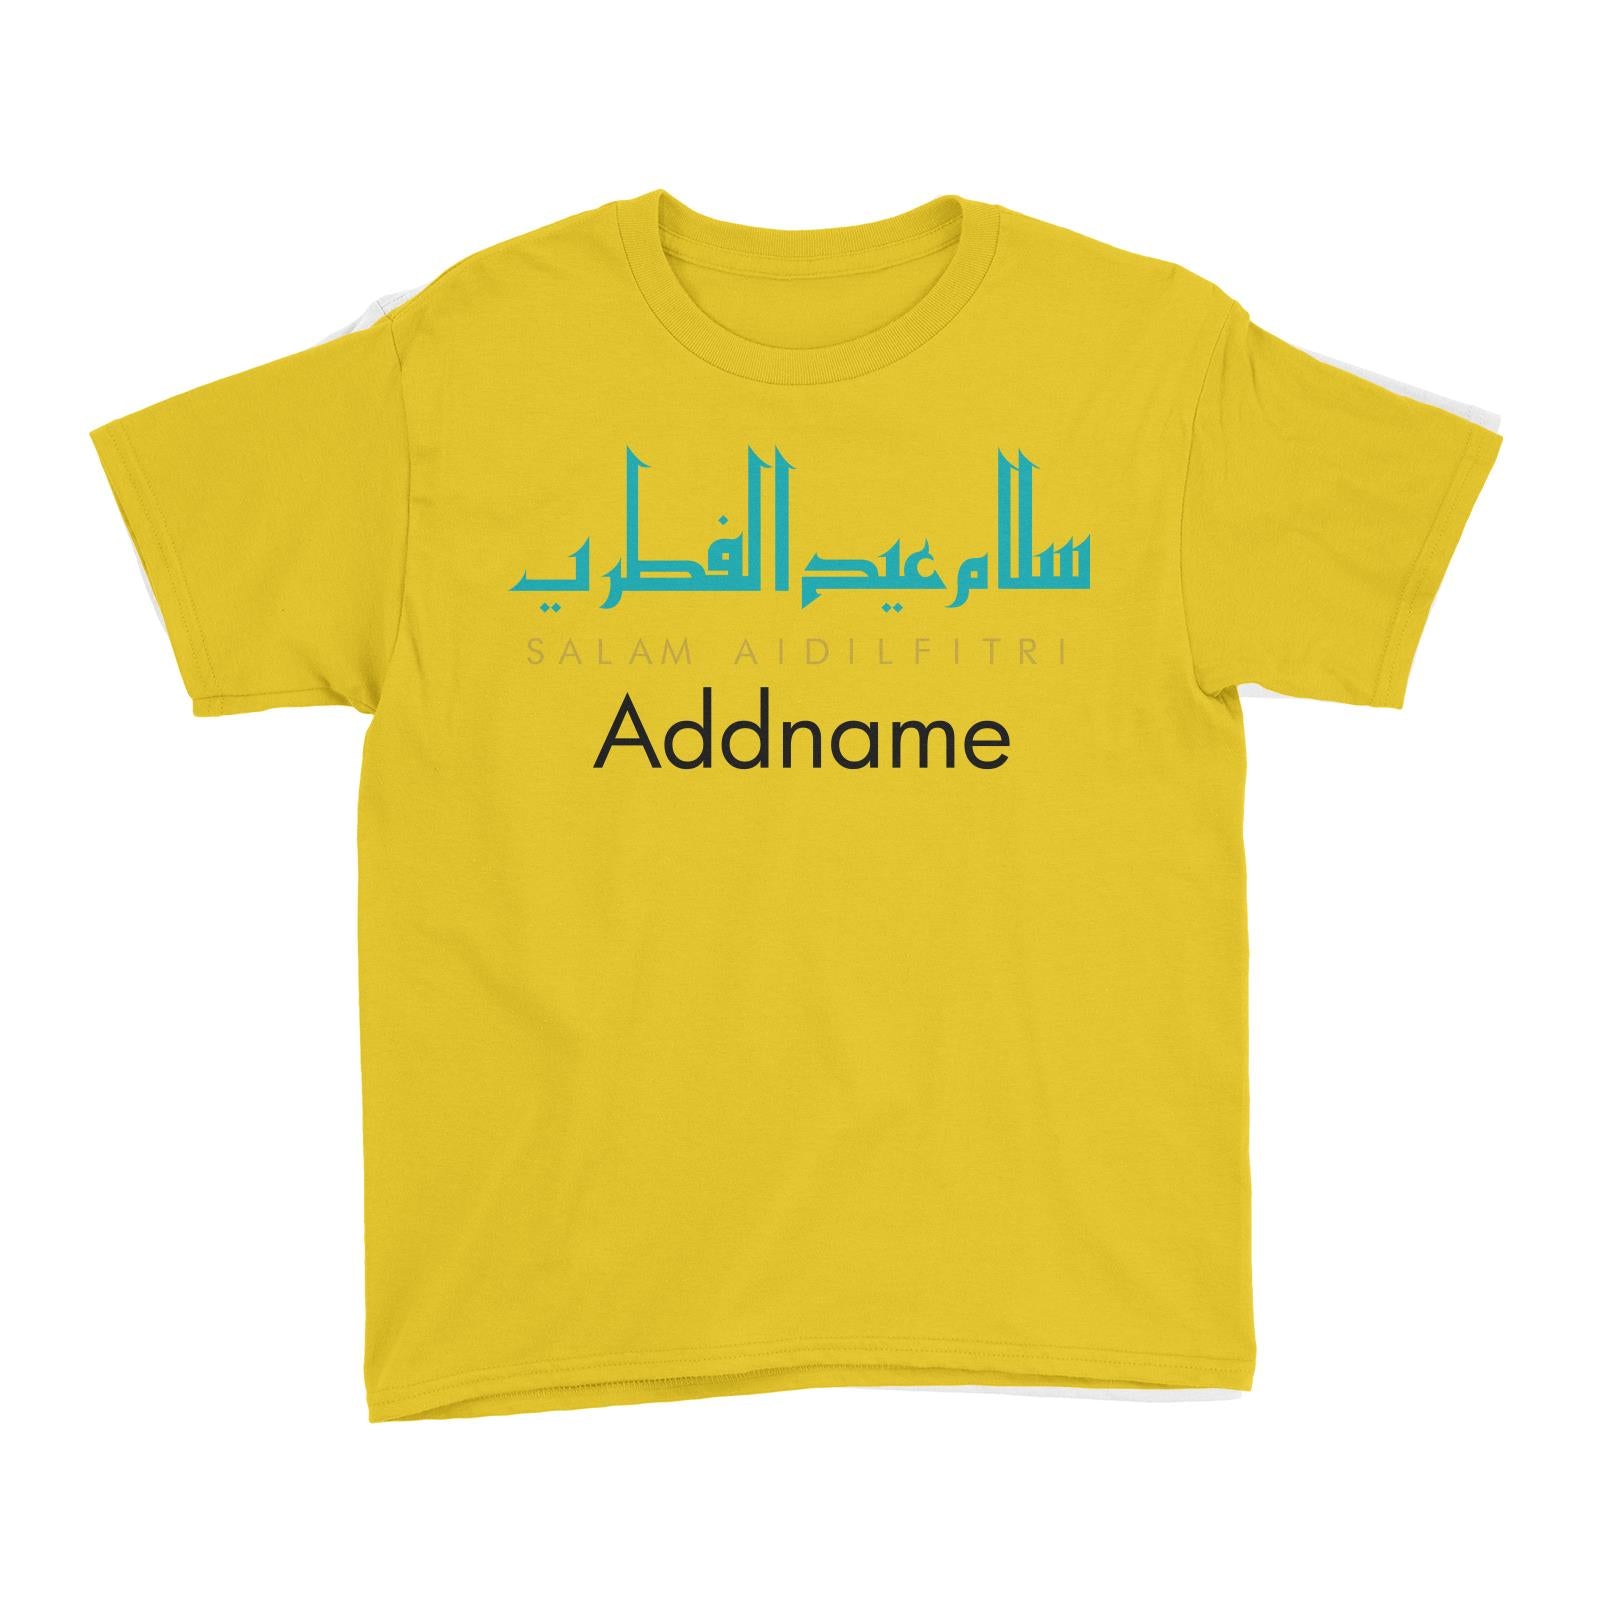 Salam Aidilfitri Jawi Typography Kid's T-Shirt